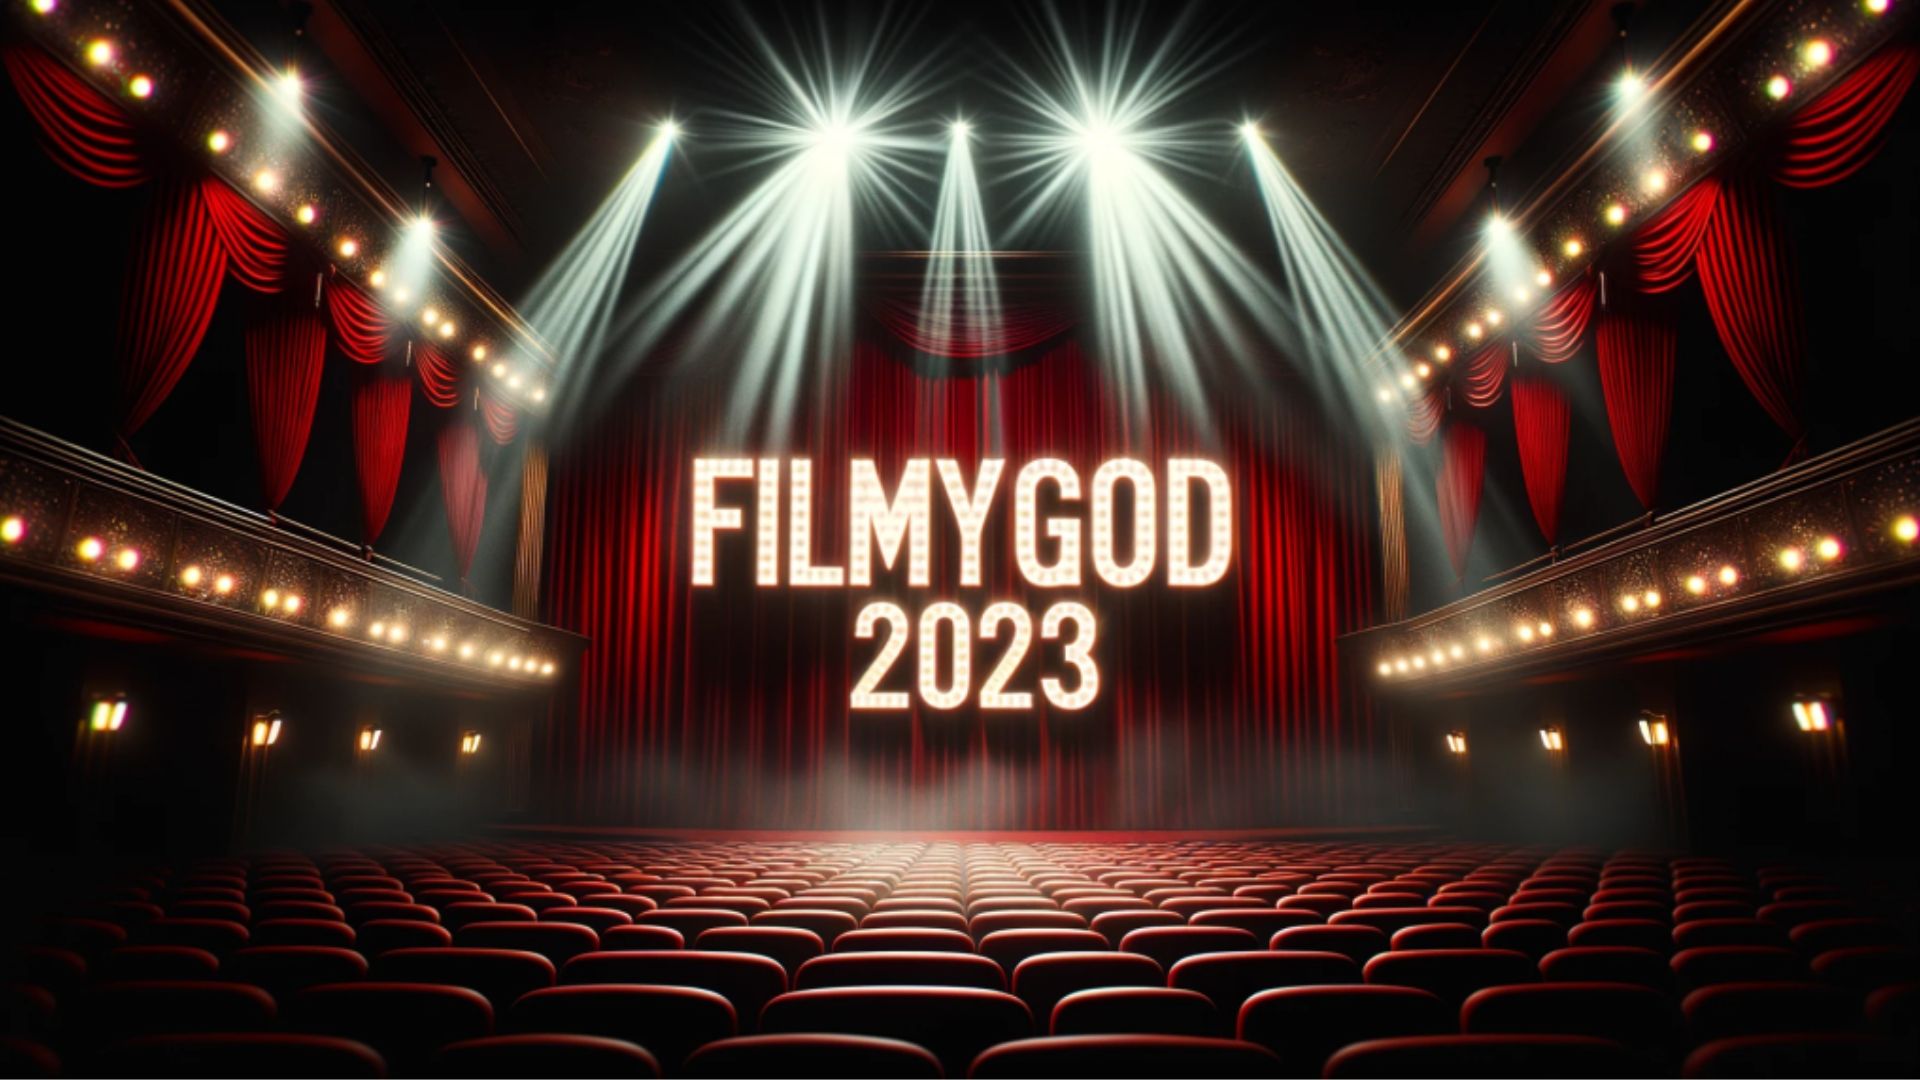 Filmygod 2023